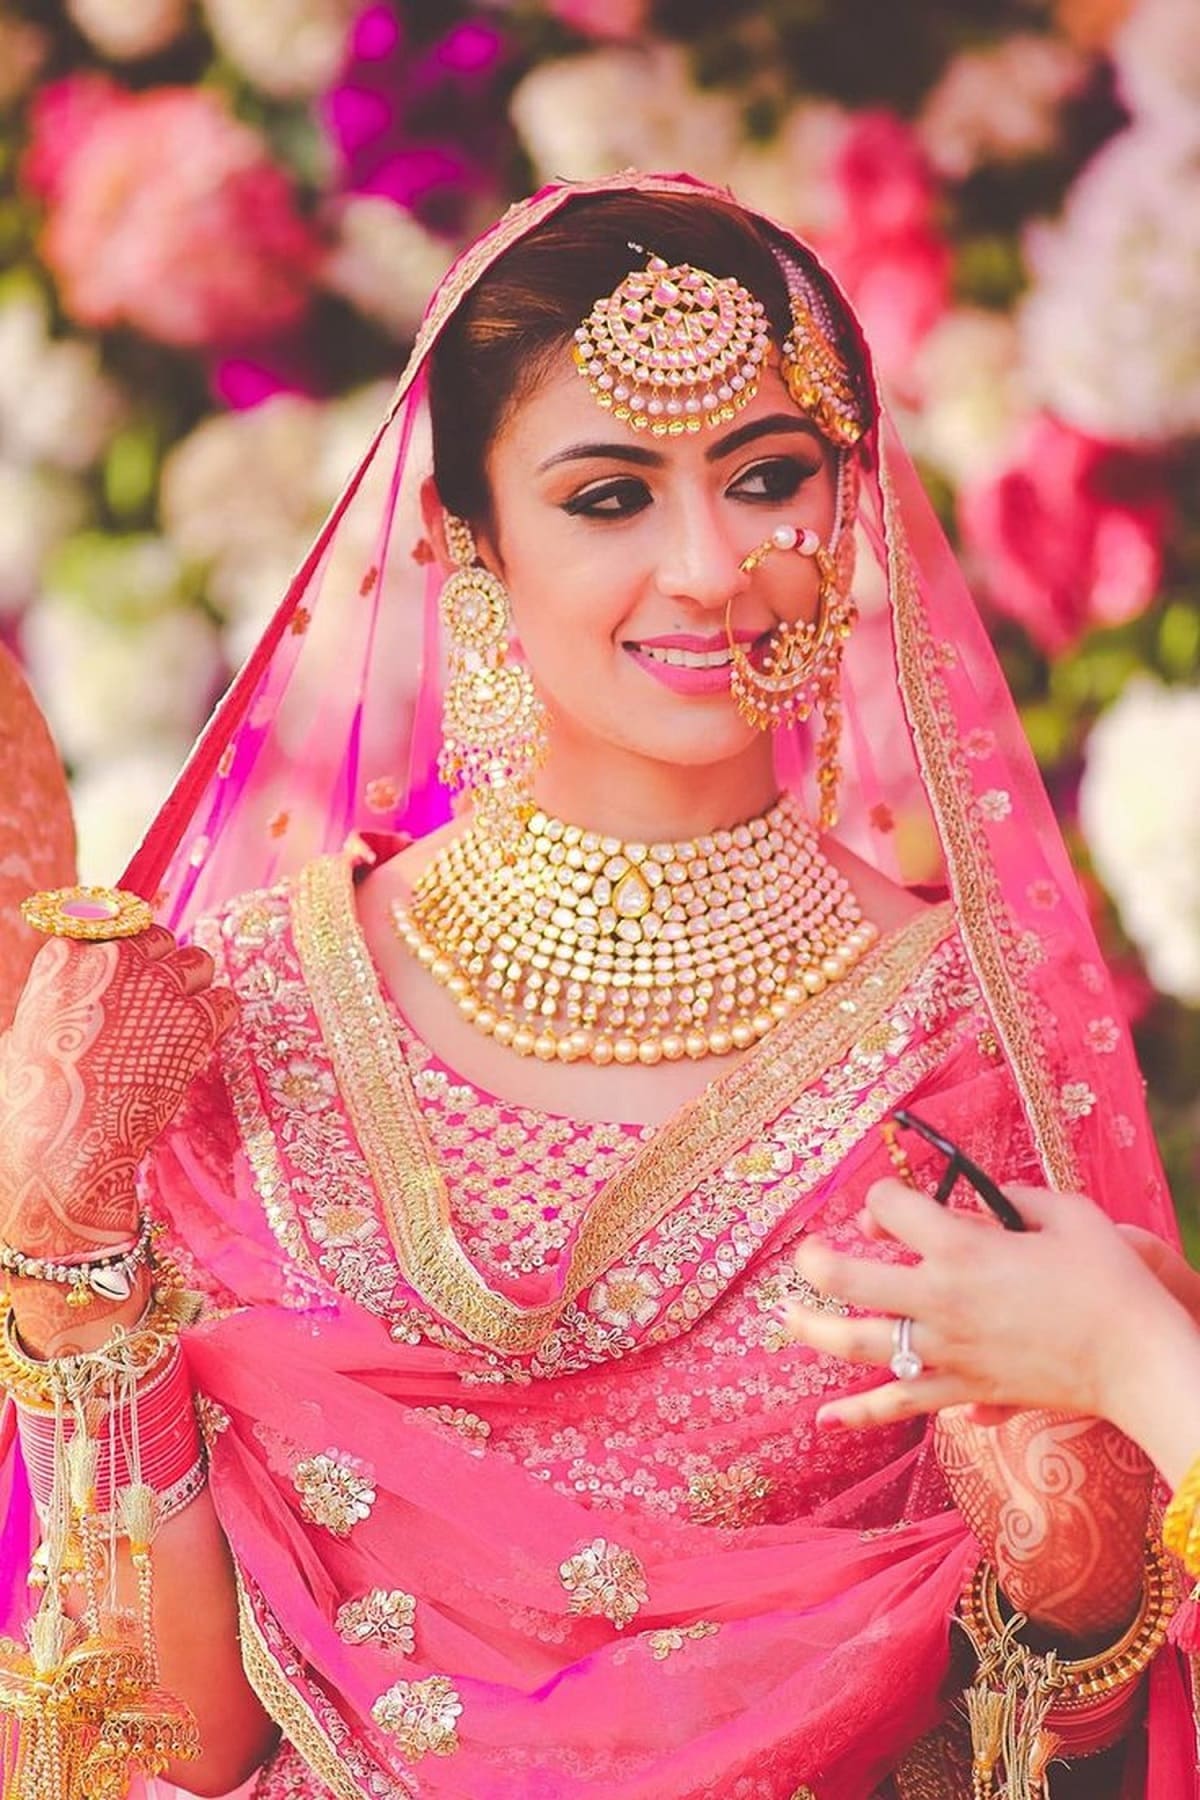 Top Punjabi Bridal Looks You Must Consider For Your Punjabi Wedding